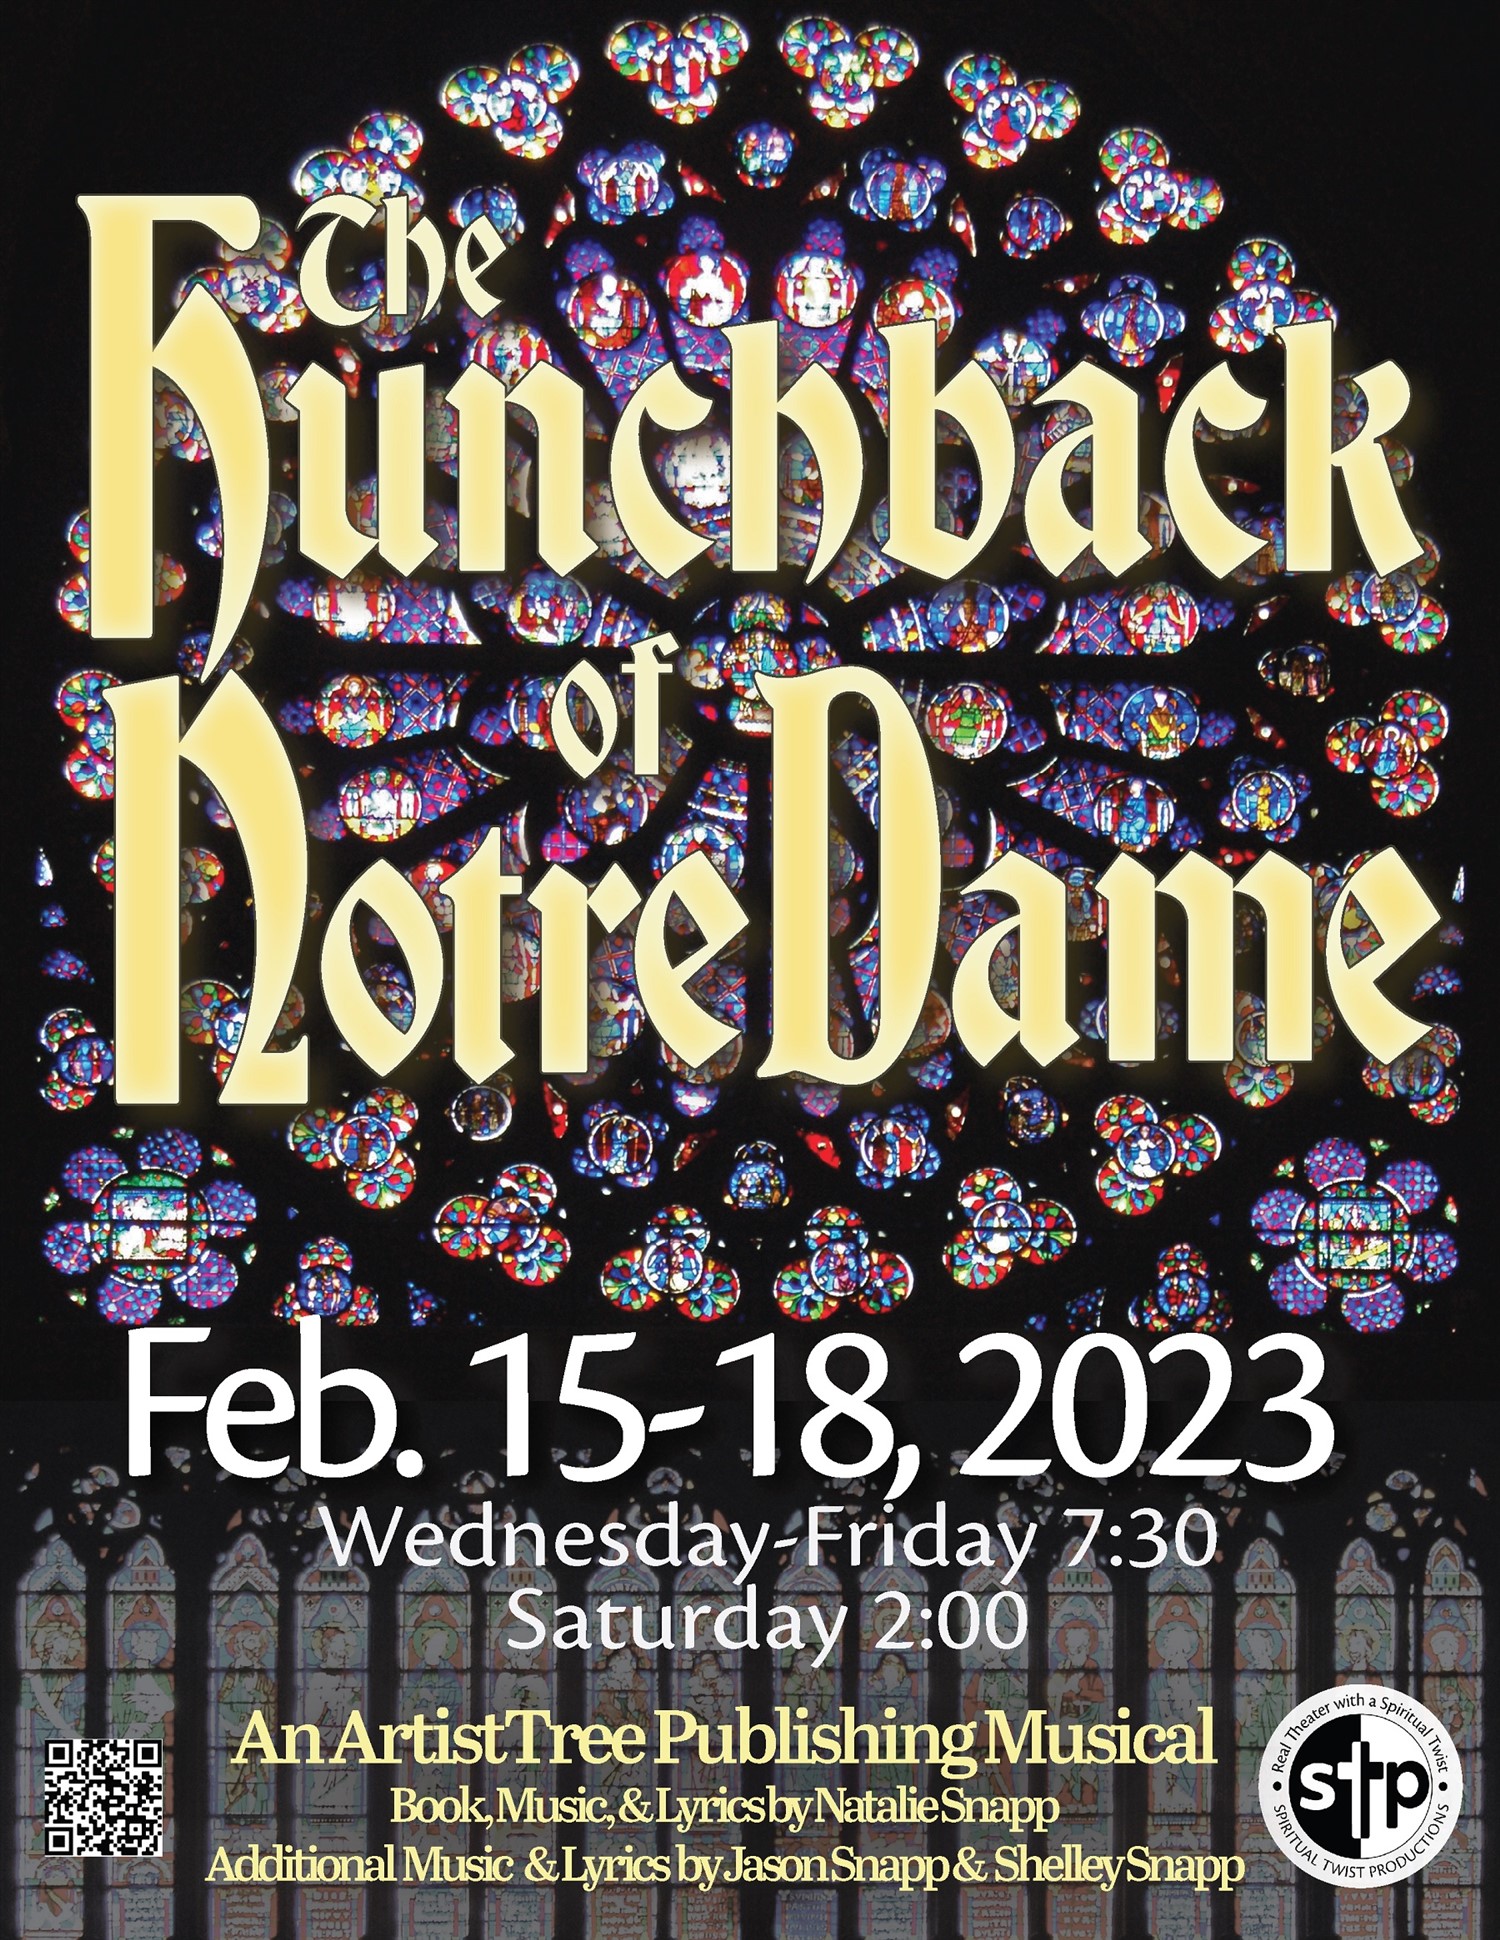 The Hunchback of Notre Dame Wednesday, February 15, 2023 @ 7:30 PM on feb. 15, 19:30@Spiritual Twist Productions - Elegir asientoCompra entradas y obtén información enSpiritual Twist Productions tickets.spiritualtwist.com